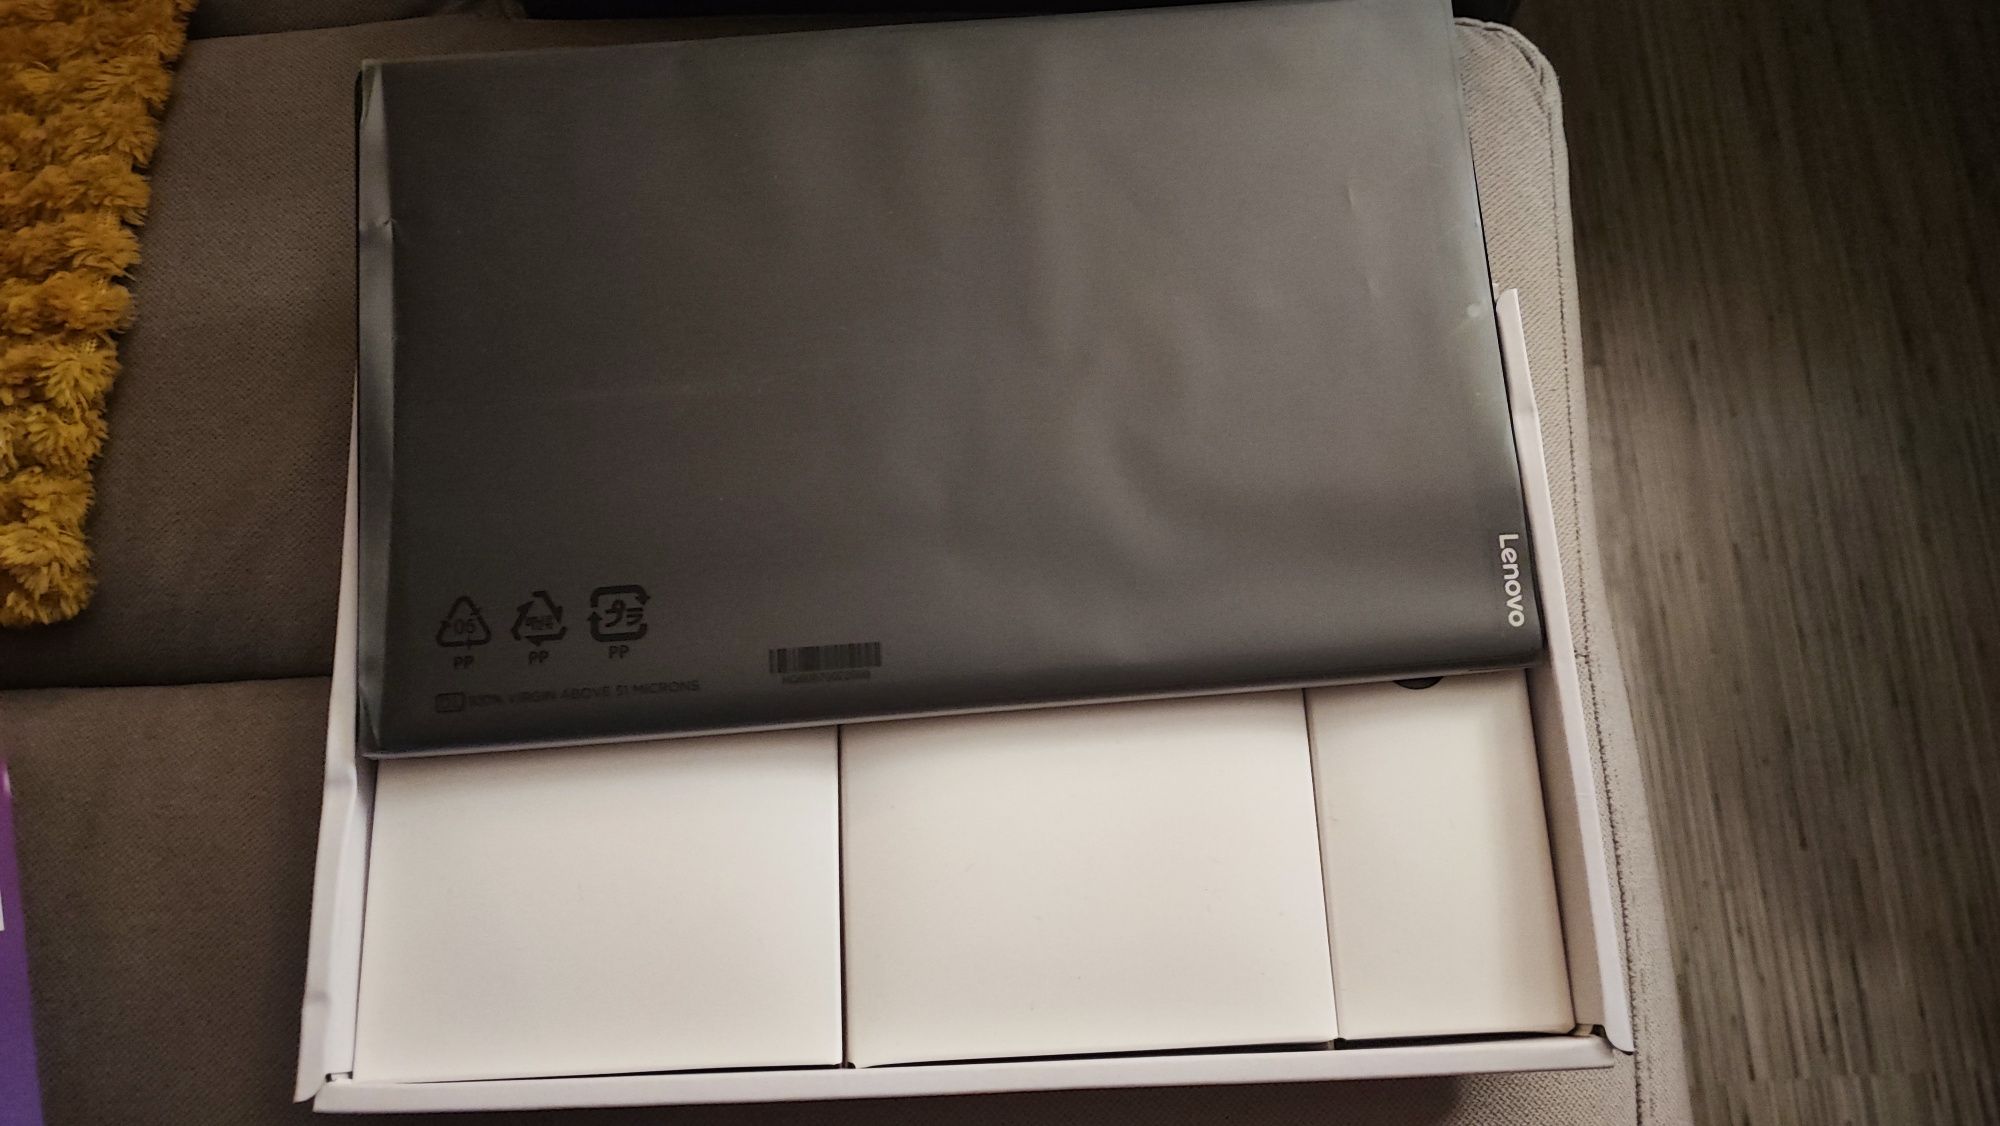 Tableta Lenovo tab M10 FHD PLUS, slot sim, impecabila + husa cadou